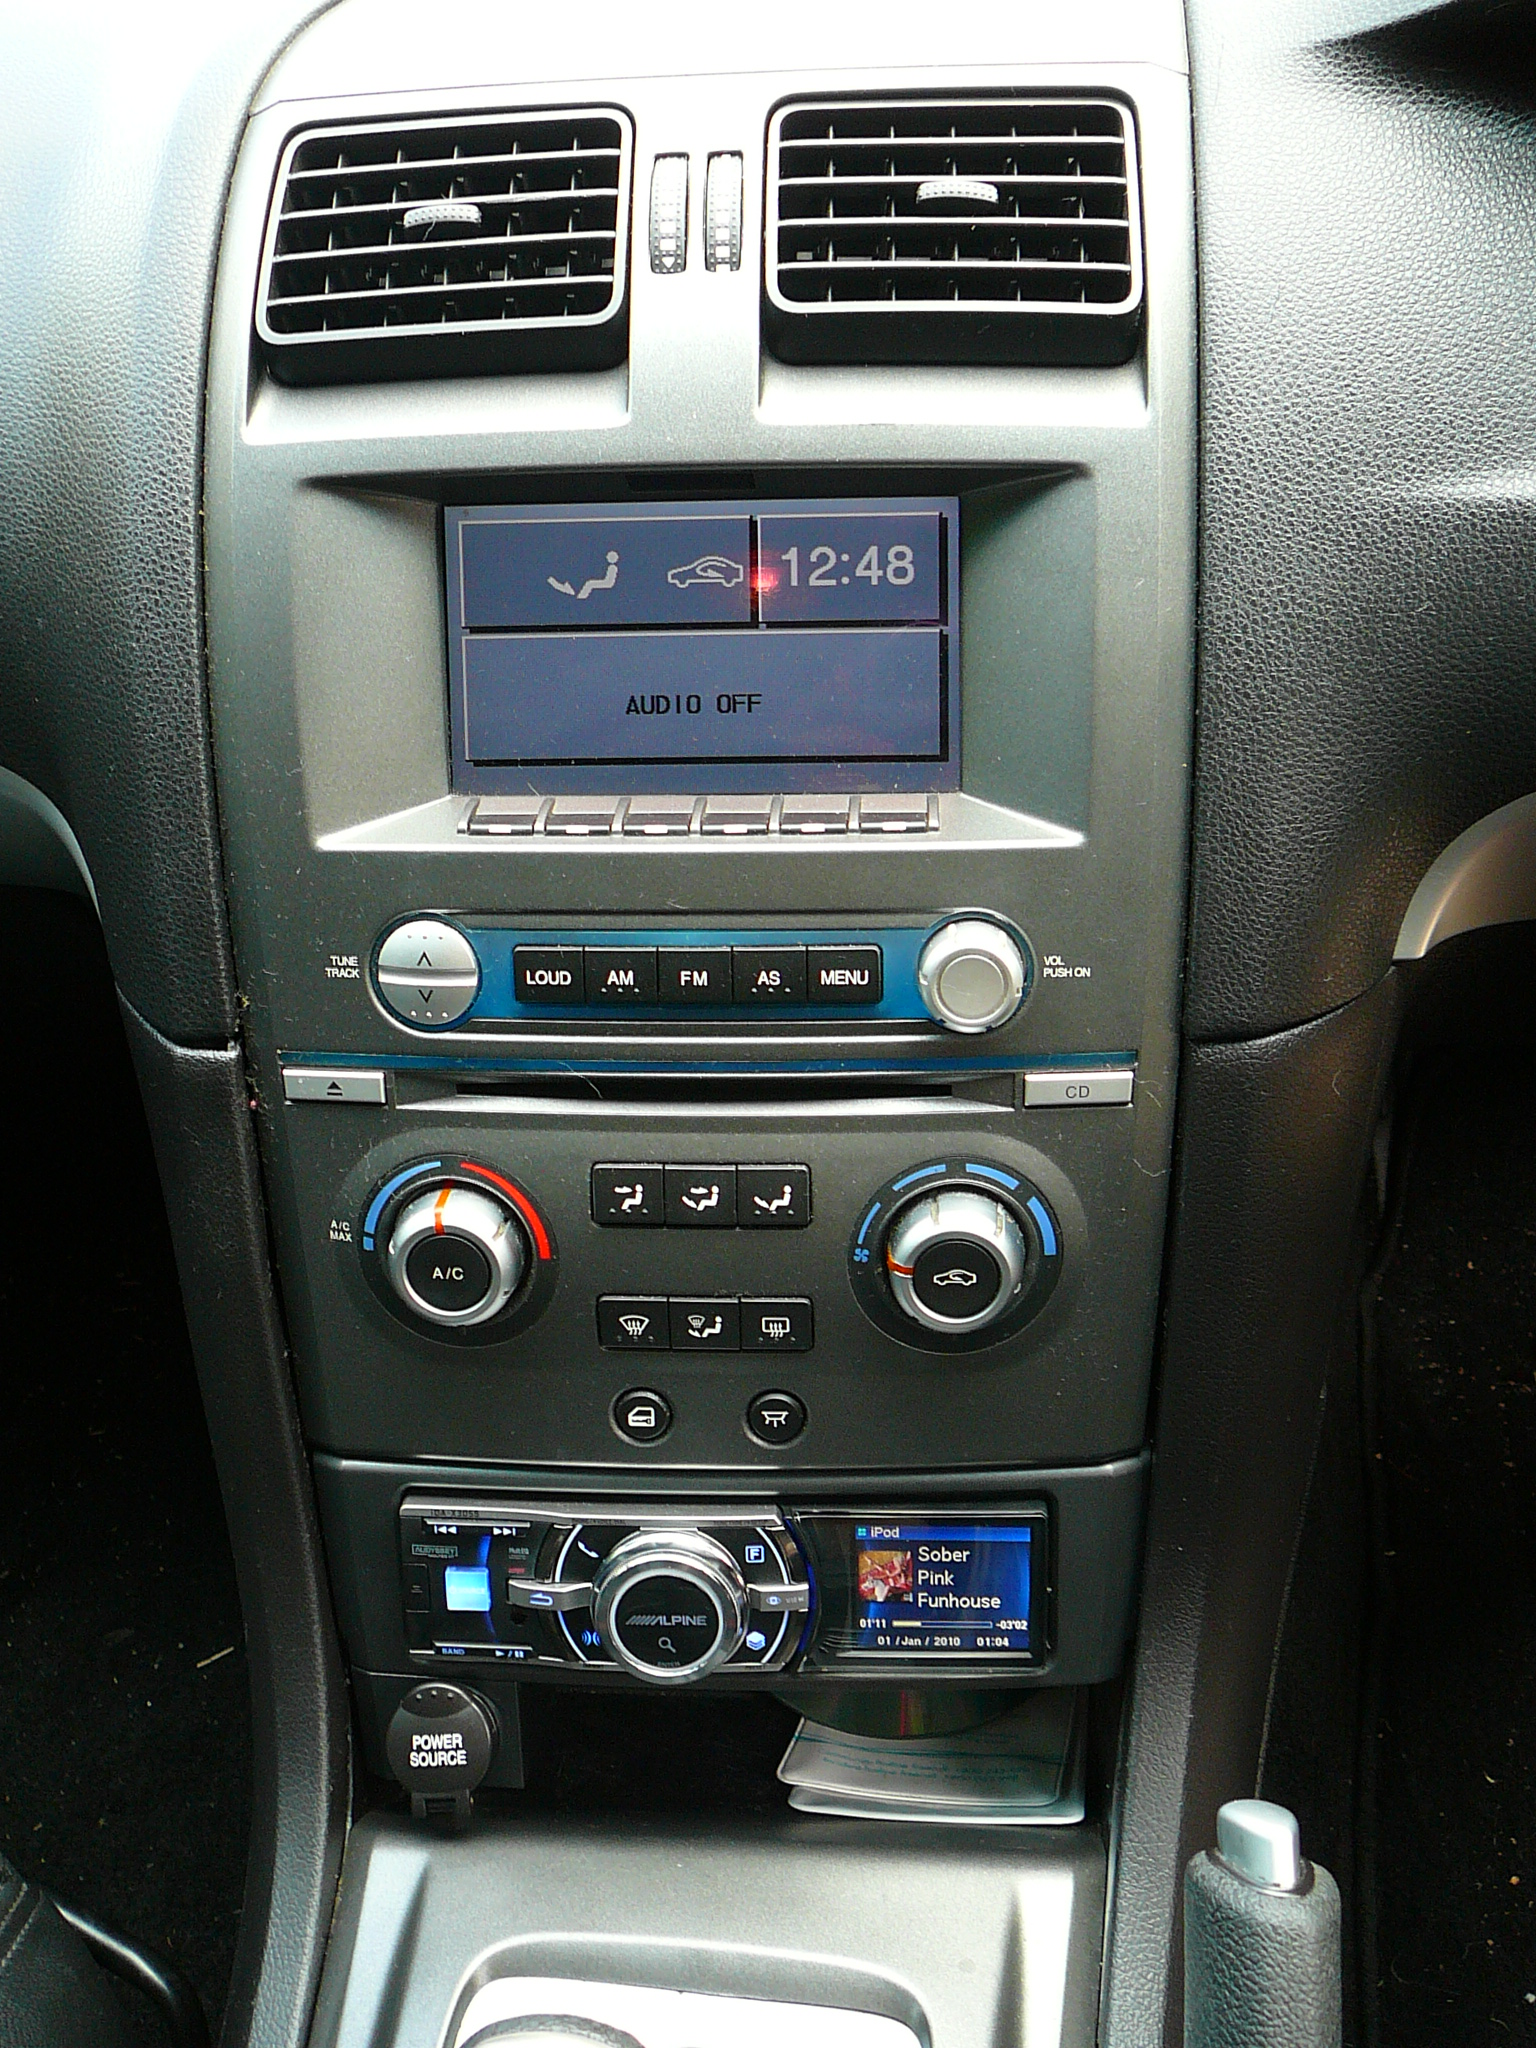 Ford BF Falcon XR6 with an Alpine IDA-X305s multi media receiver installed